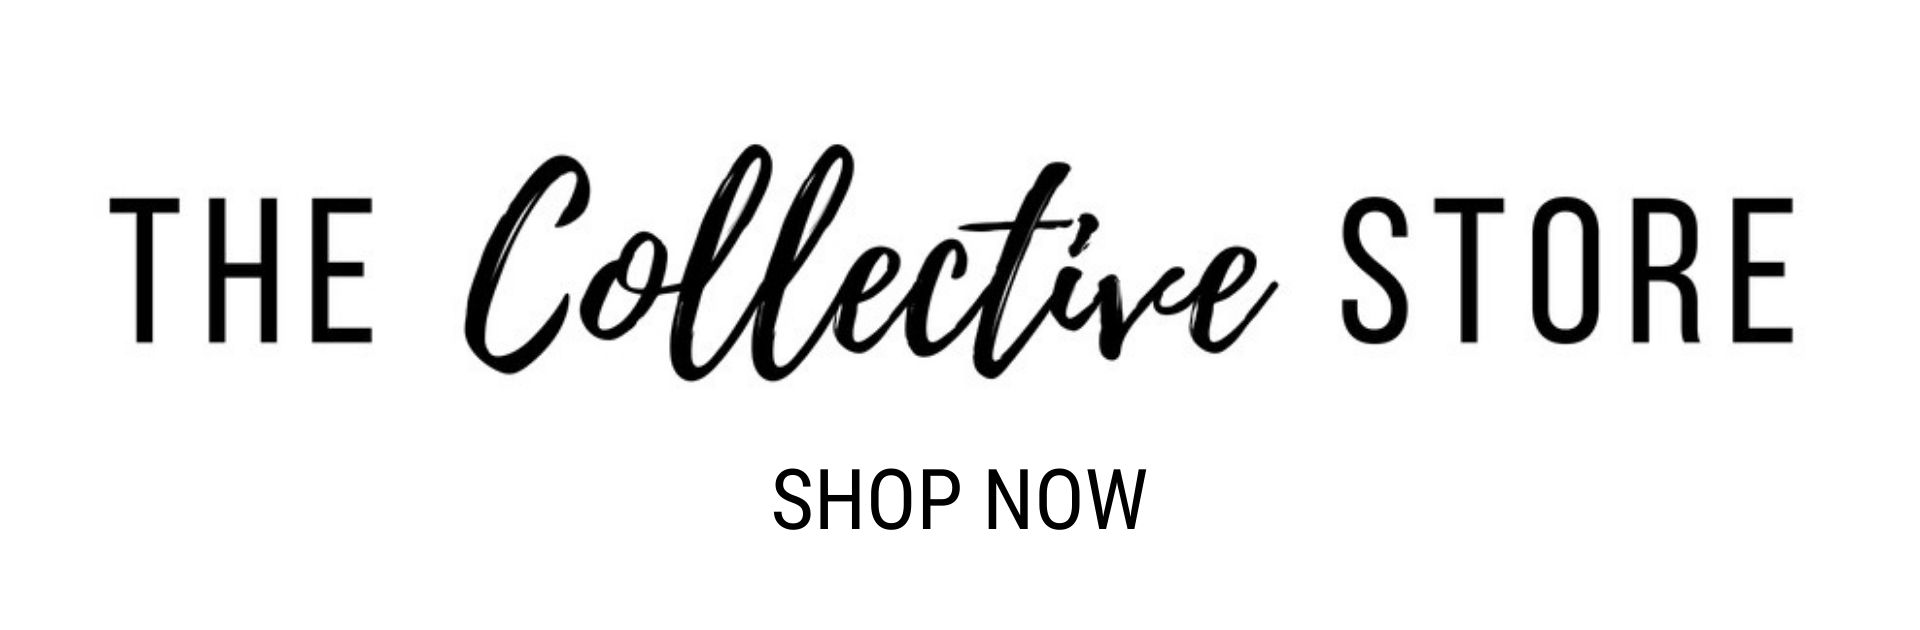 AP_Collective Store_Shop Now